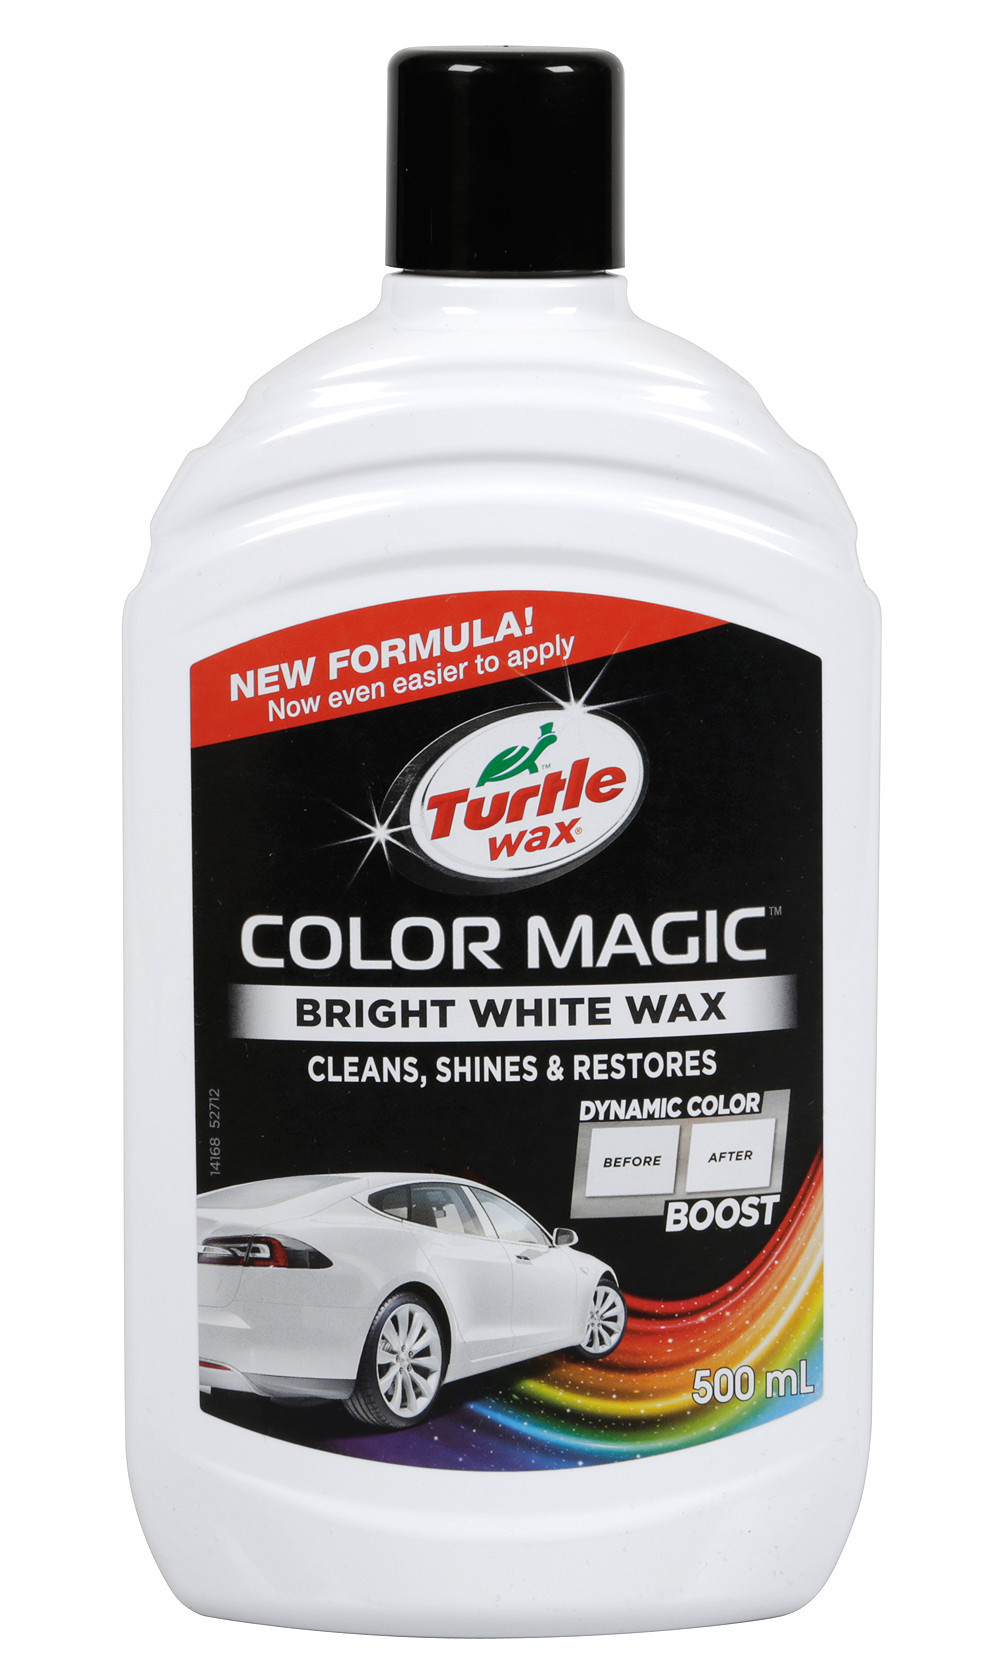 Turtle wax Color Magic car polishing paste 500 ml - White thumb